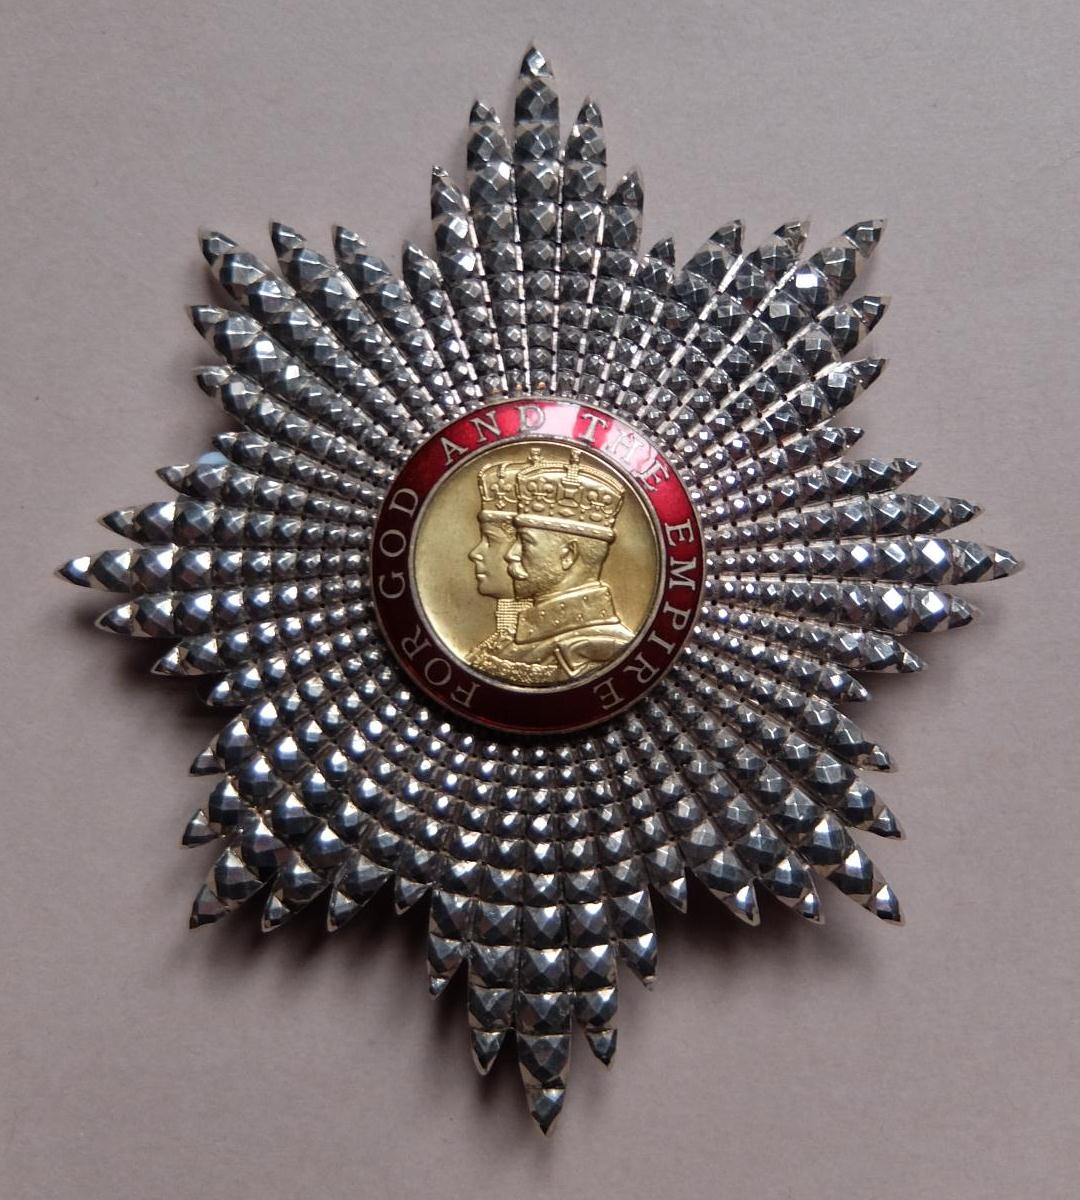 Order of British Empire star